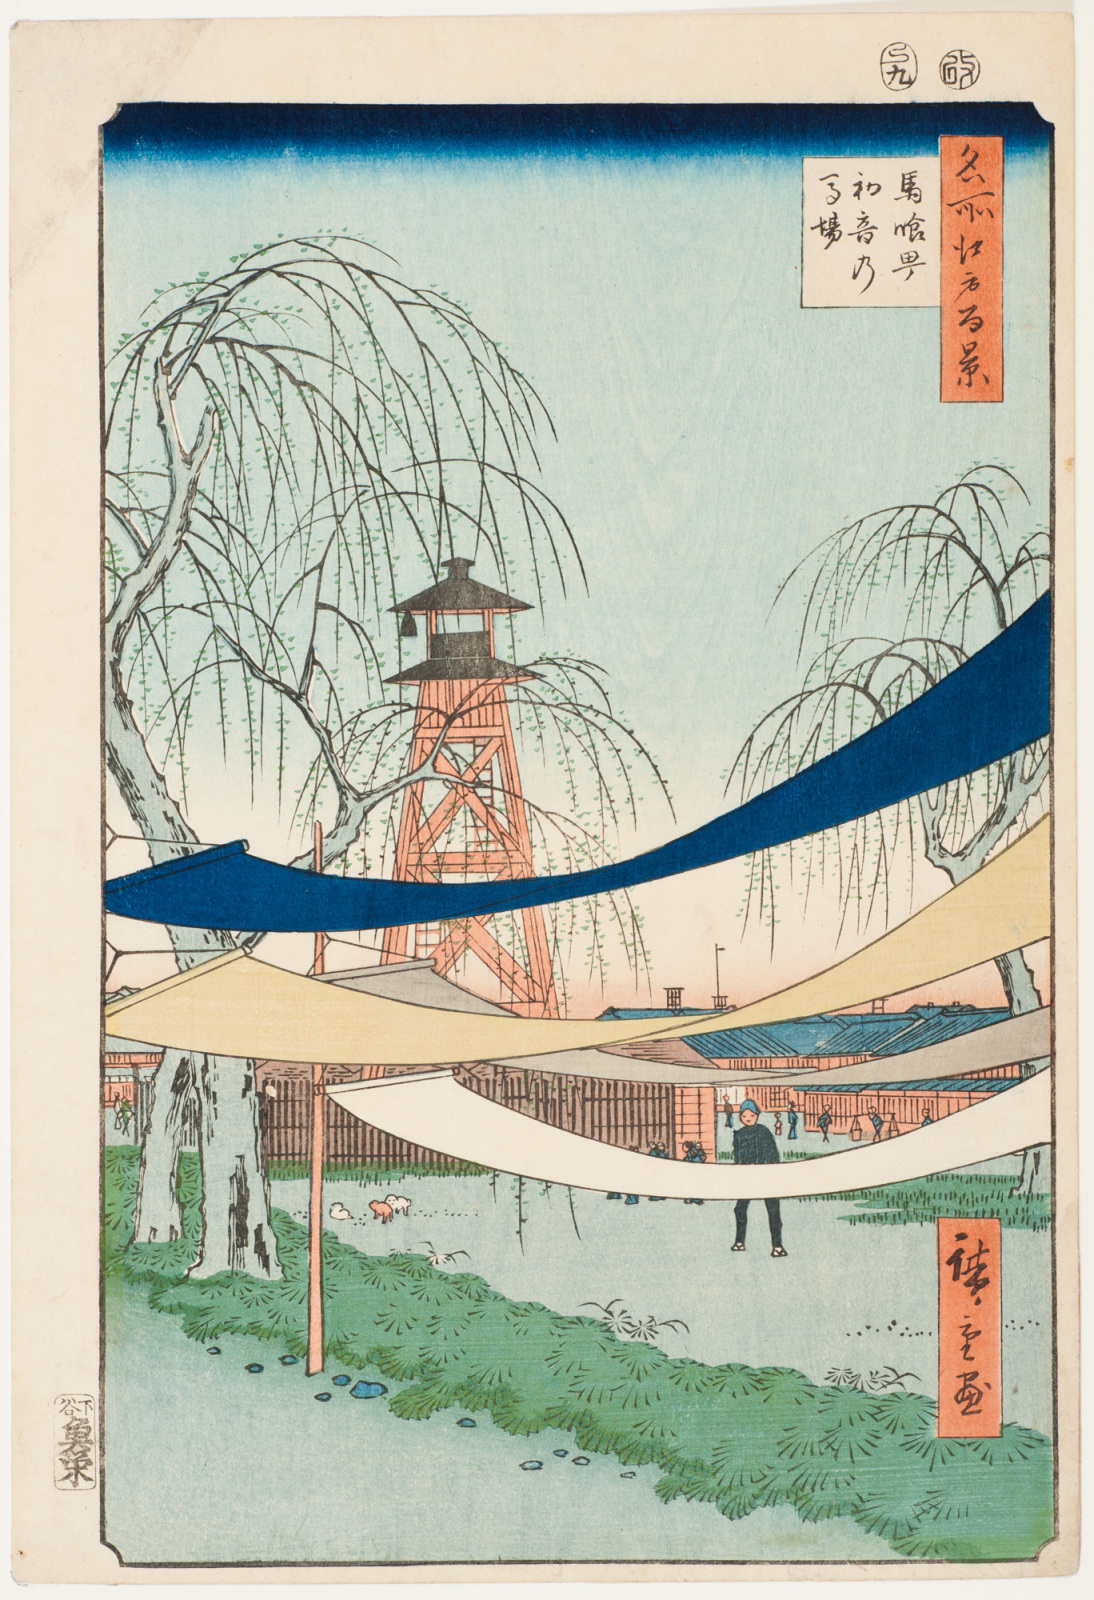 Hatsune-rijterrein by Utagawa Hiroshige - 1856 - 34 x 22,9 cm 